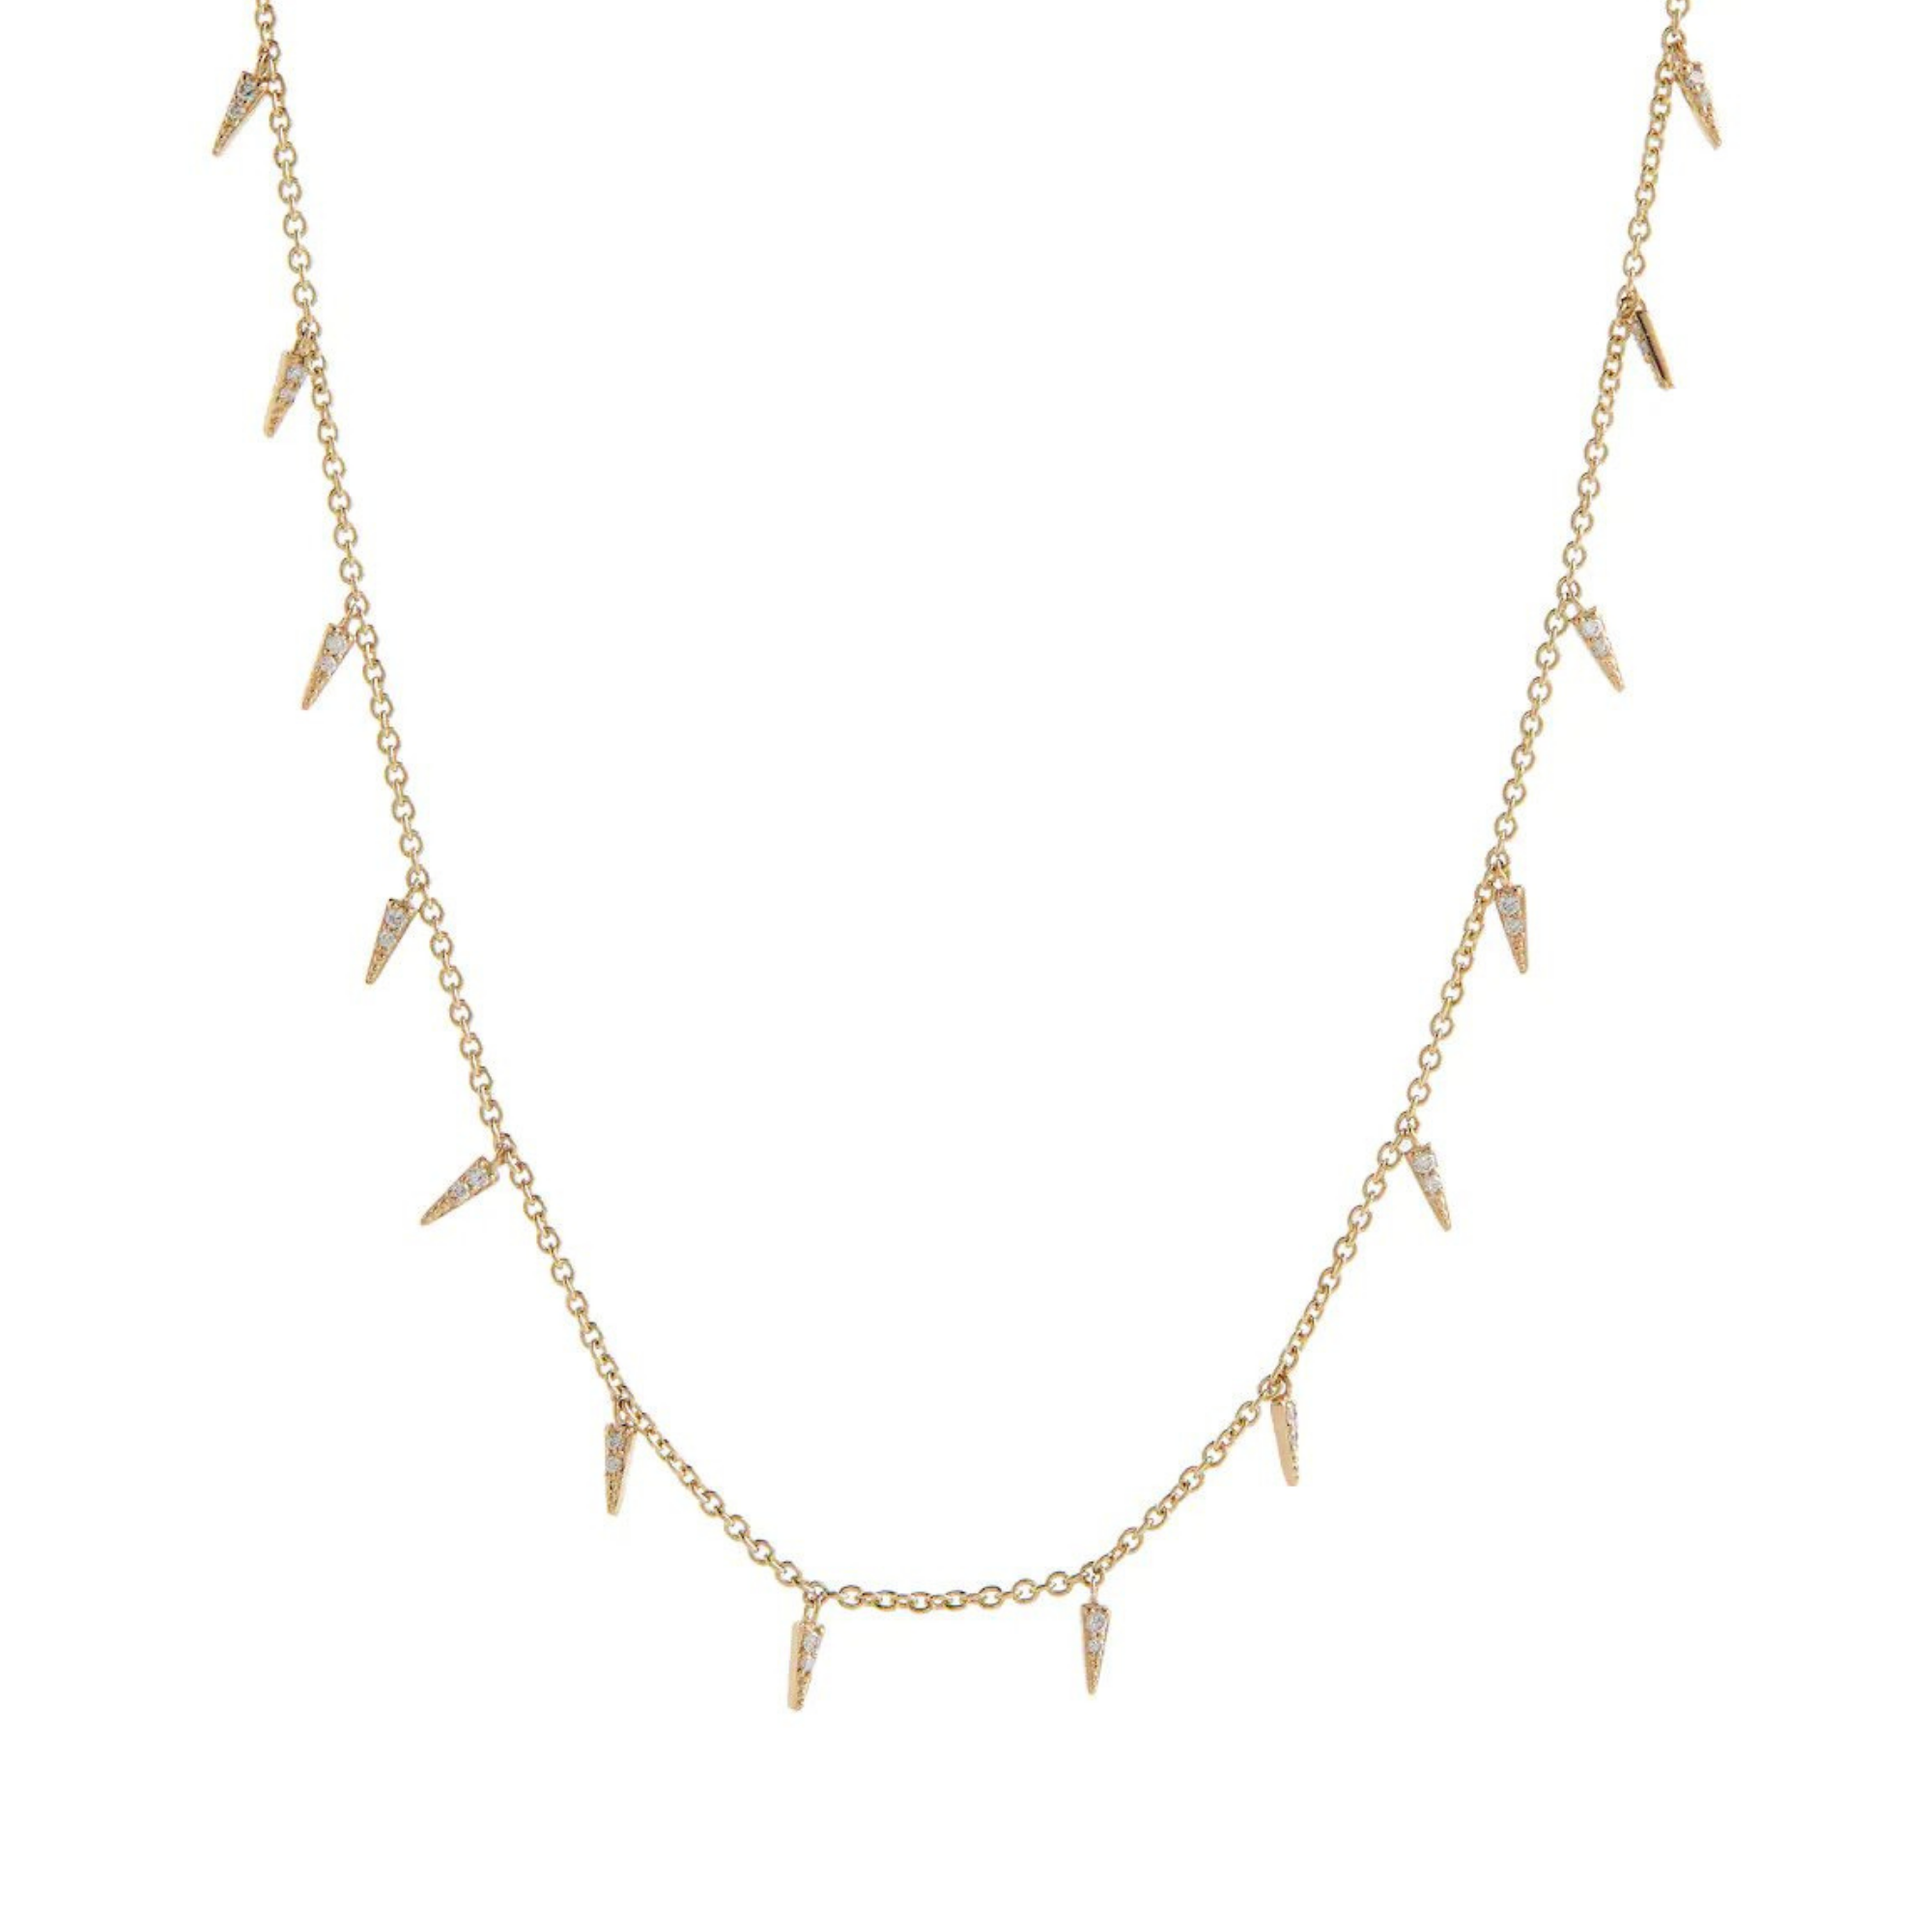 Sydney Evan Small Pavé Fringed 14K Gold Necklace with Diamonds, $1,378